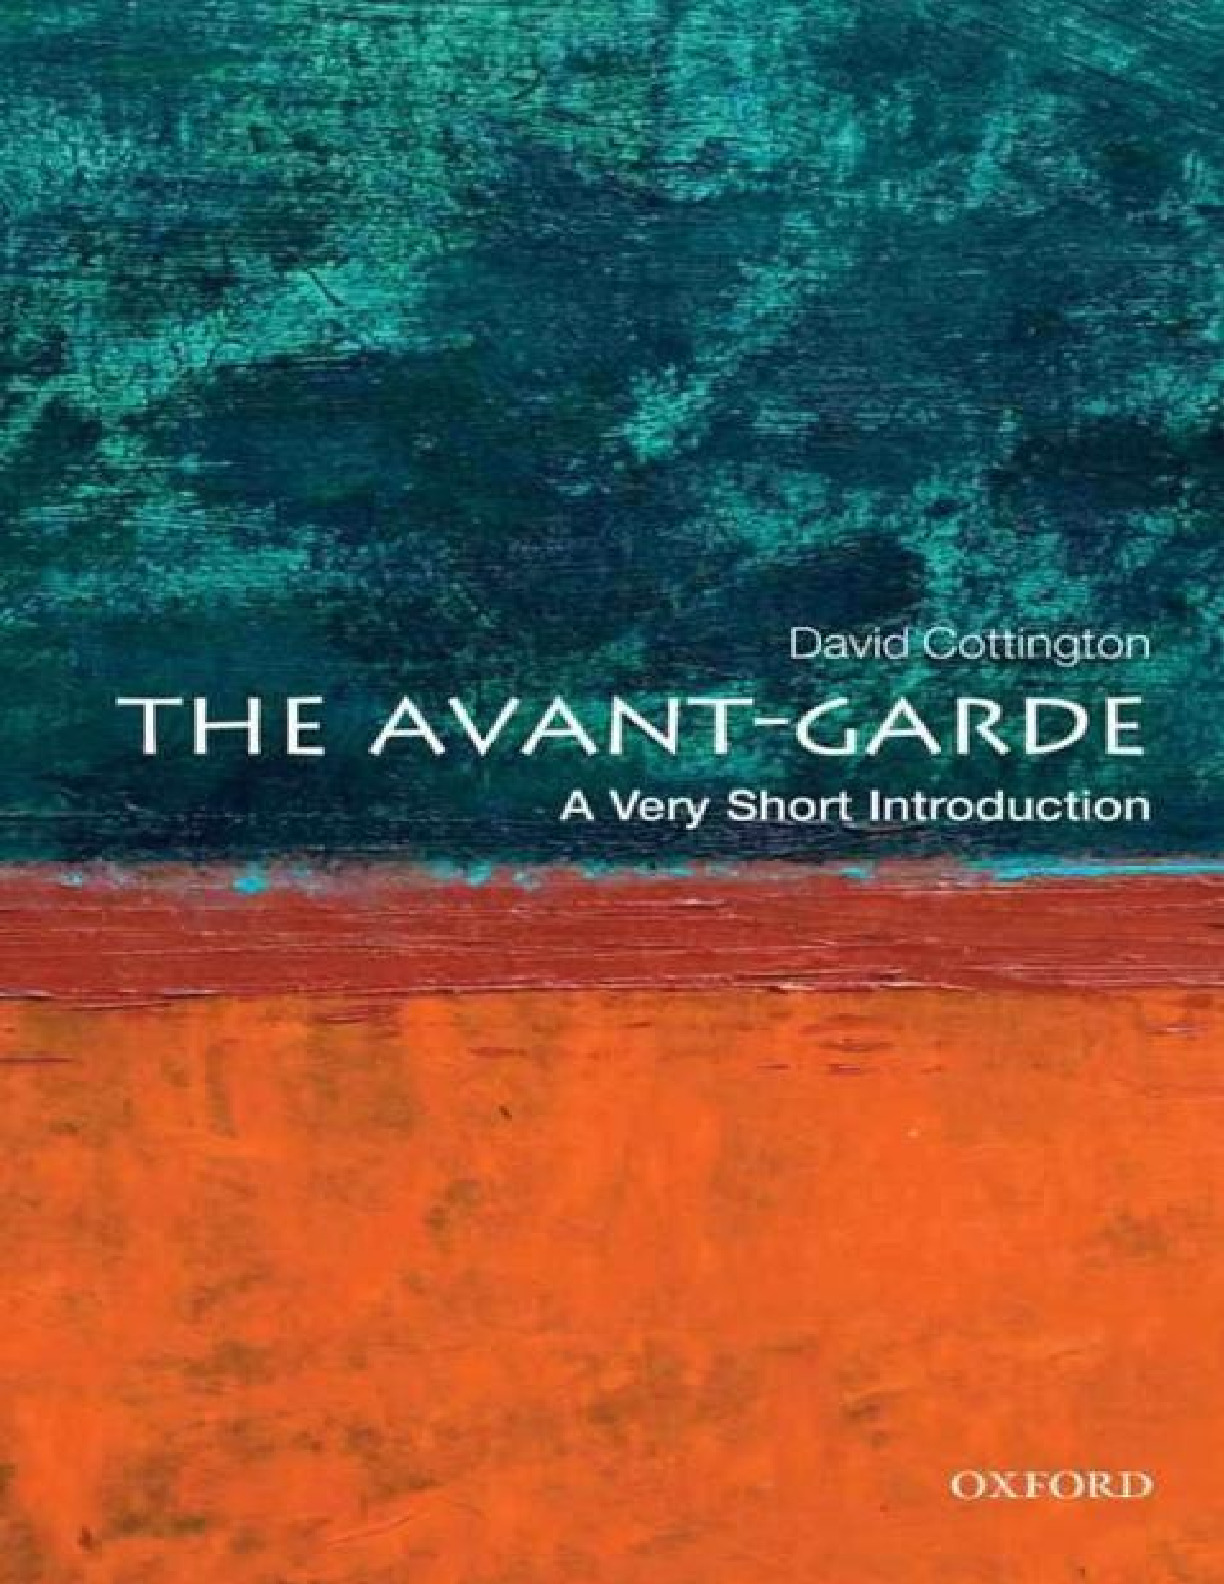 The avant-garde _ a very short introduction ( PDFDrive.com )